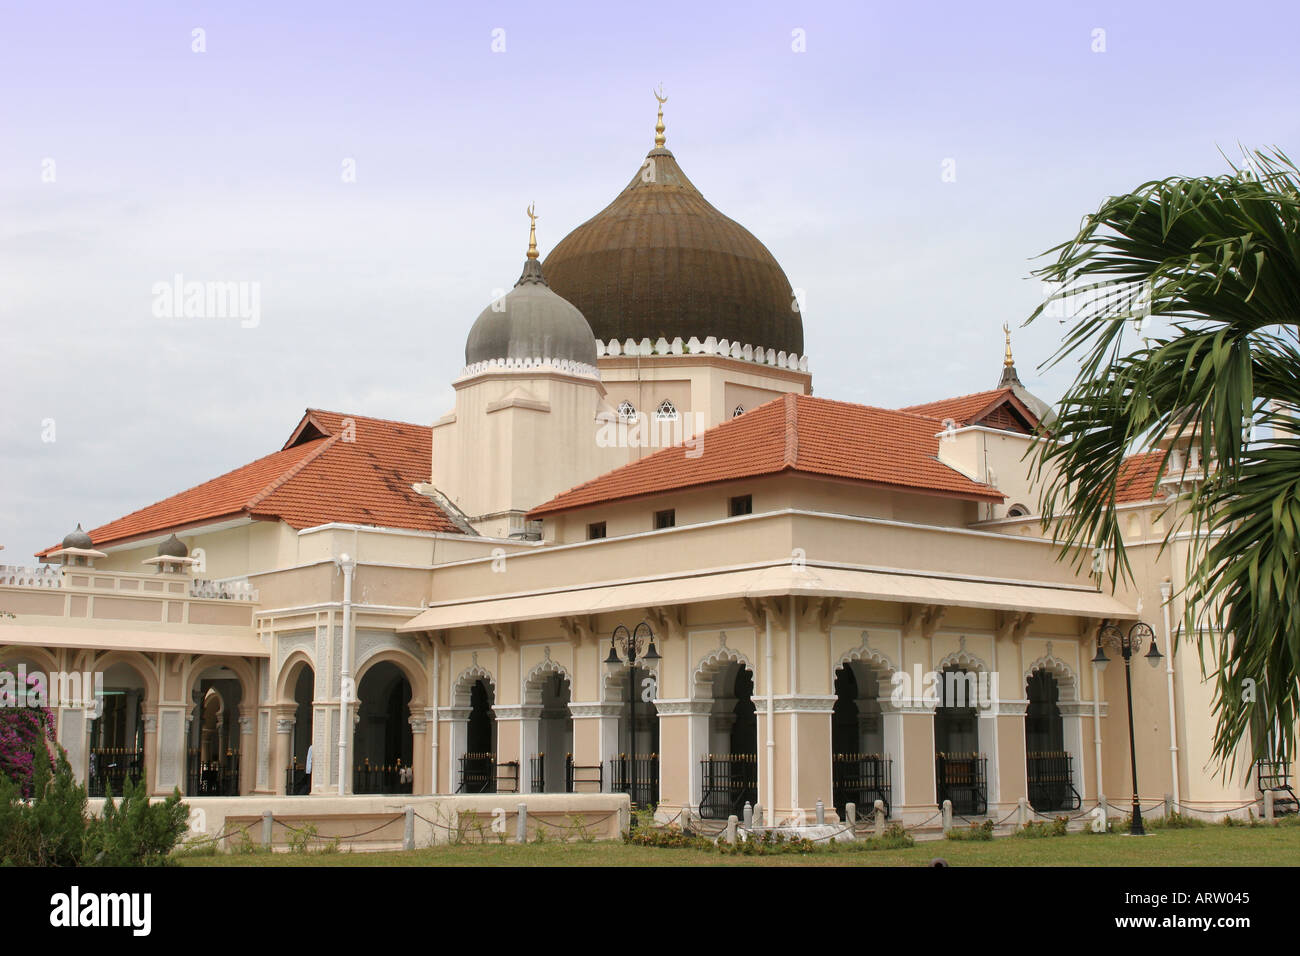 Masjid Kapitan Kling George Town Penang Malaysia Stock Photo